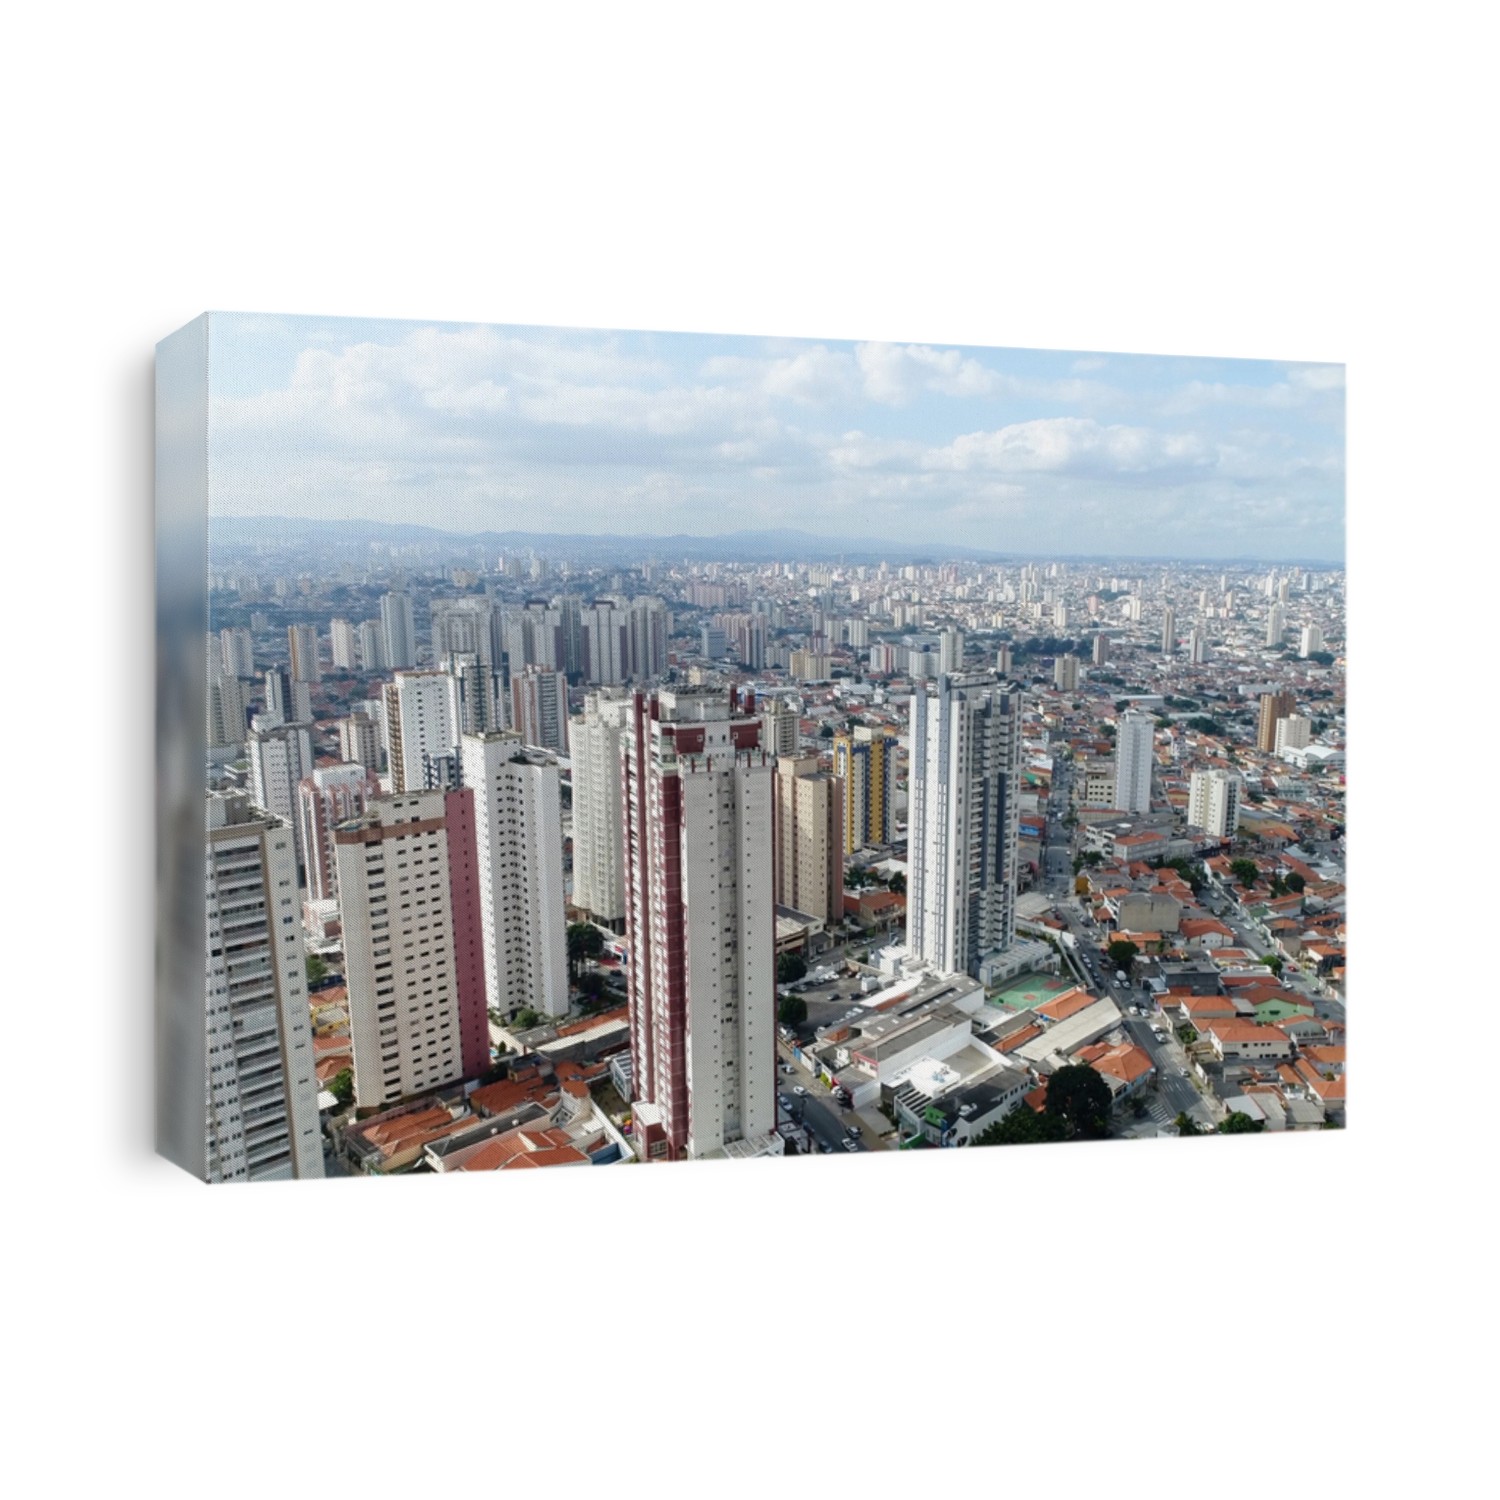 Aerial View of Tatuape District in Sao Paulo, Brazil